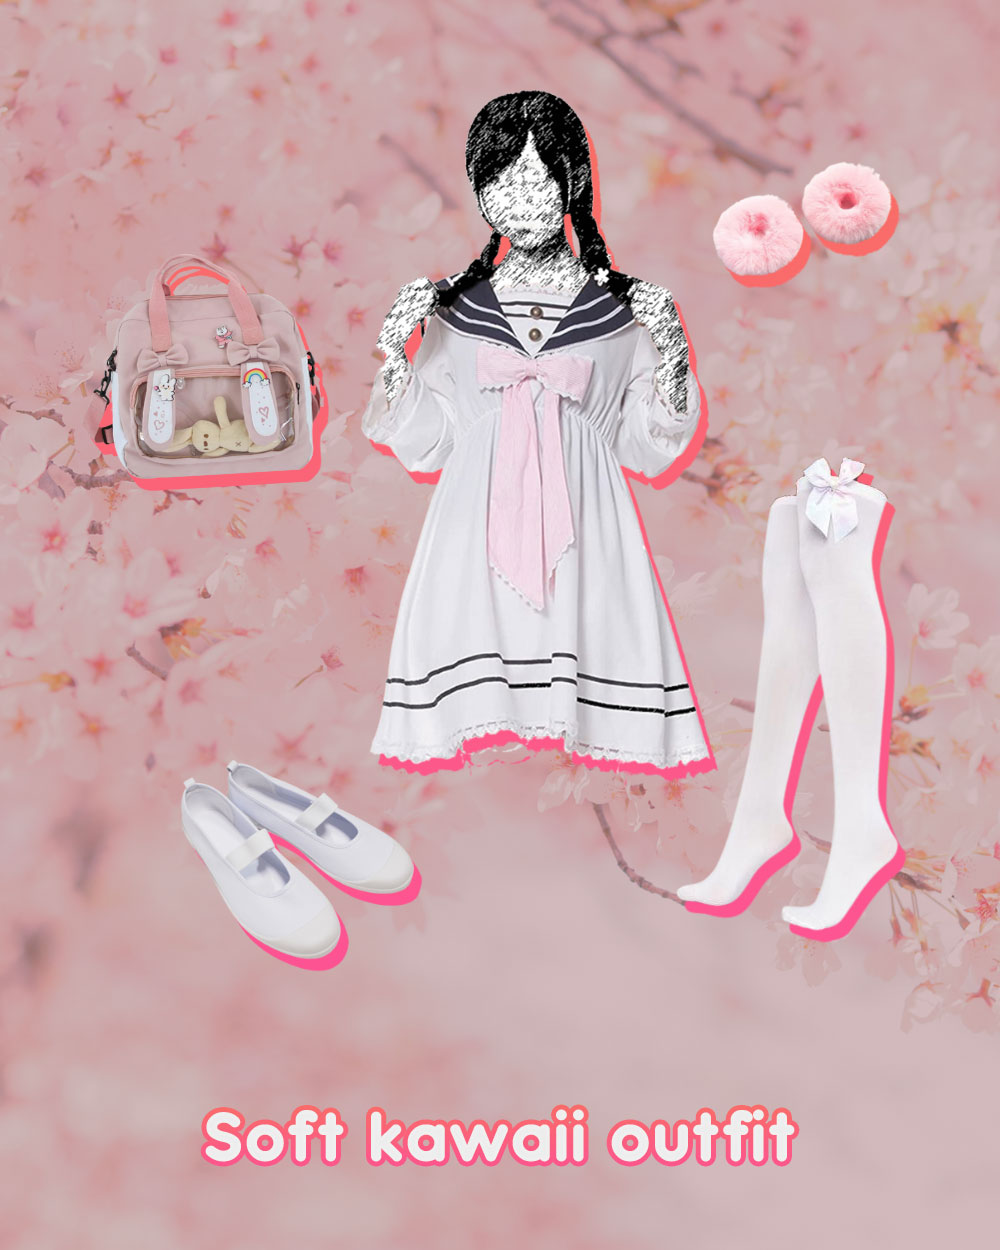 soft kawaii outfit ideas - backpack, Japanese schoolgirl dress, knee high socks, furry scrunchies, balerina shoes